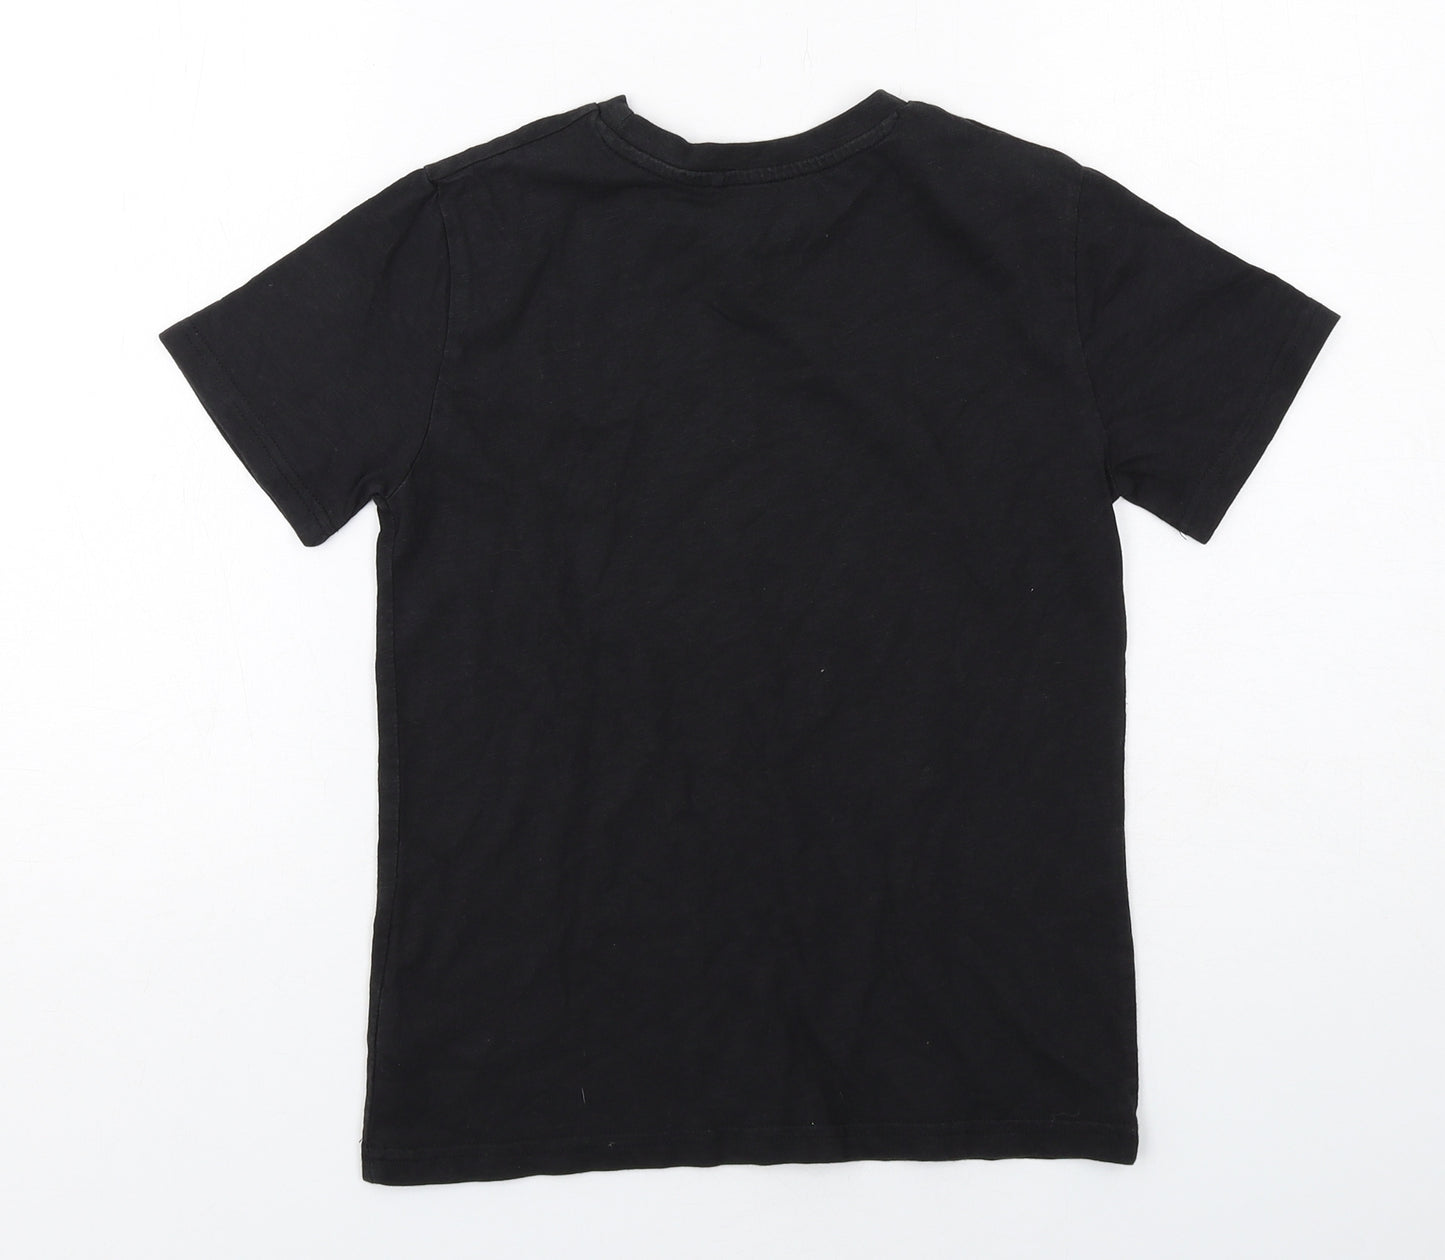 NEXT Boys Black Cotton Basic T-Shirt Size 9 Years Round Neck Pullover